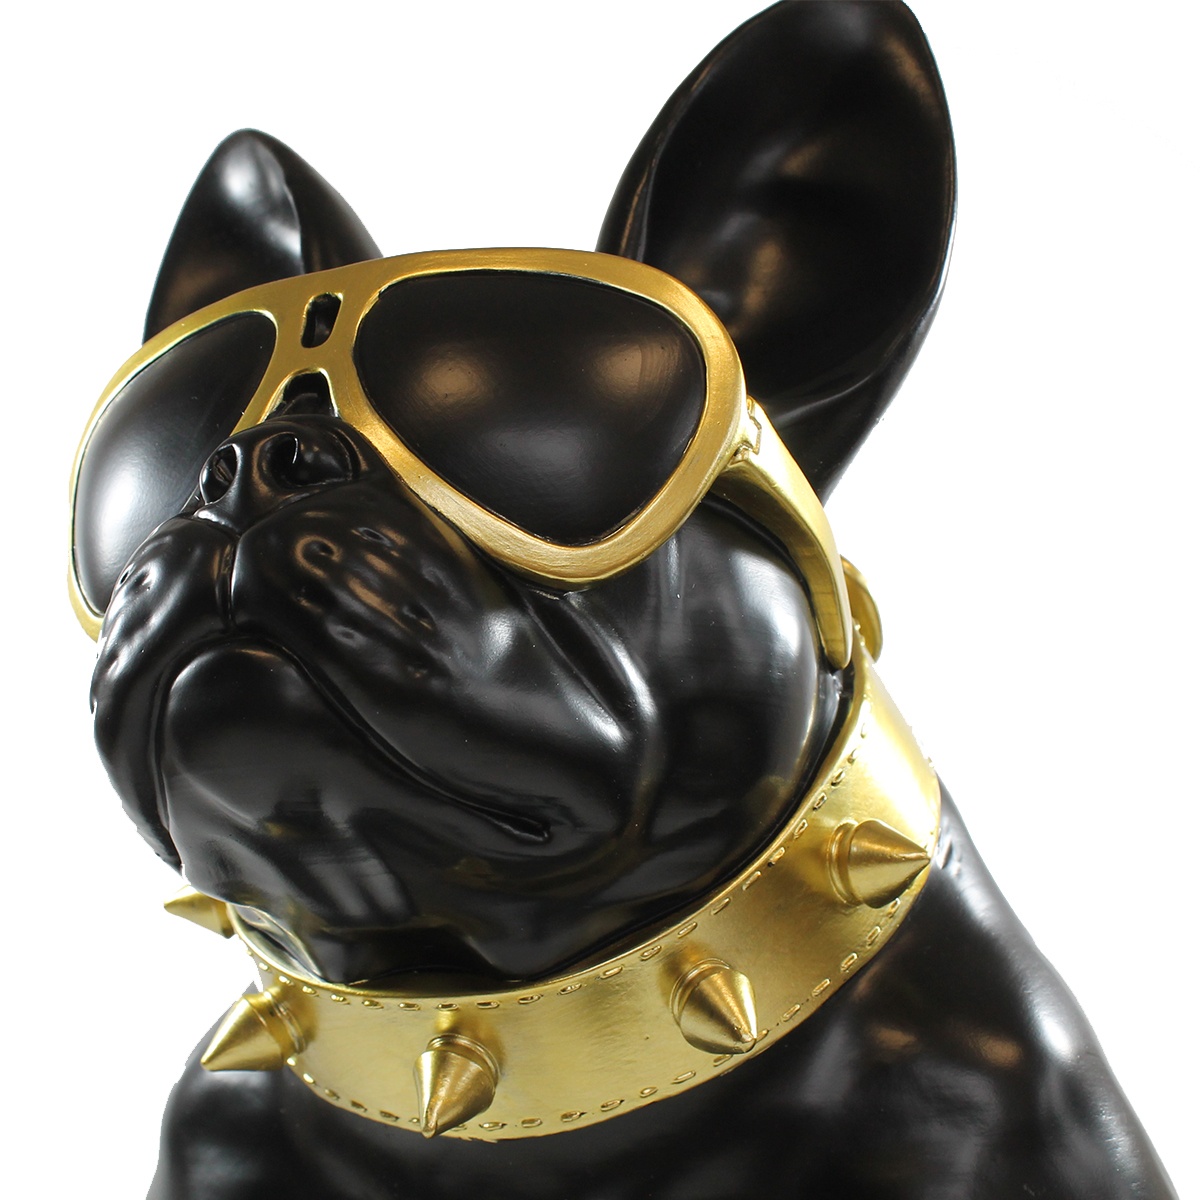 Französische Bulldogge Deko Hundefigur Siggi XL m. Brille Deko Bulldogge  schwarz